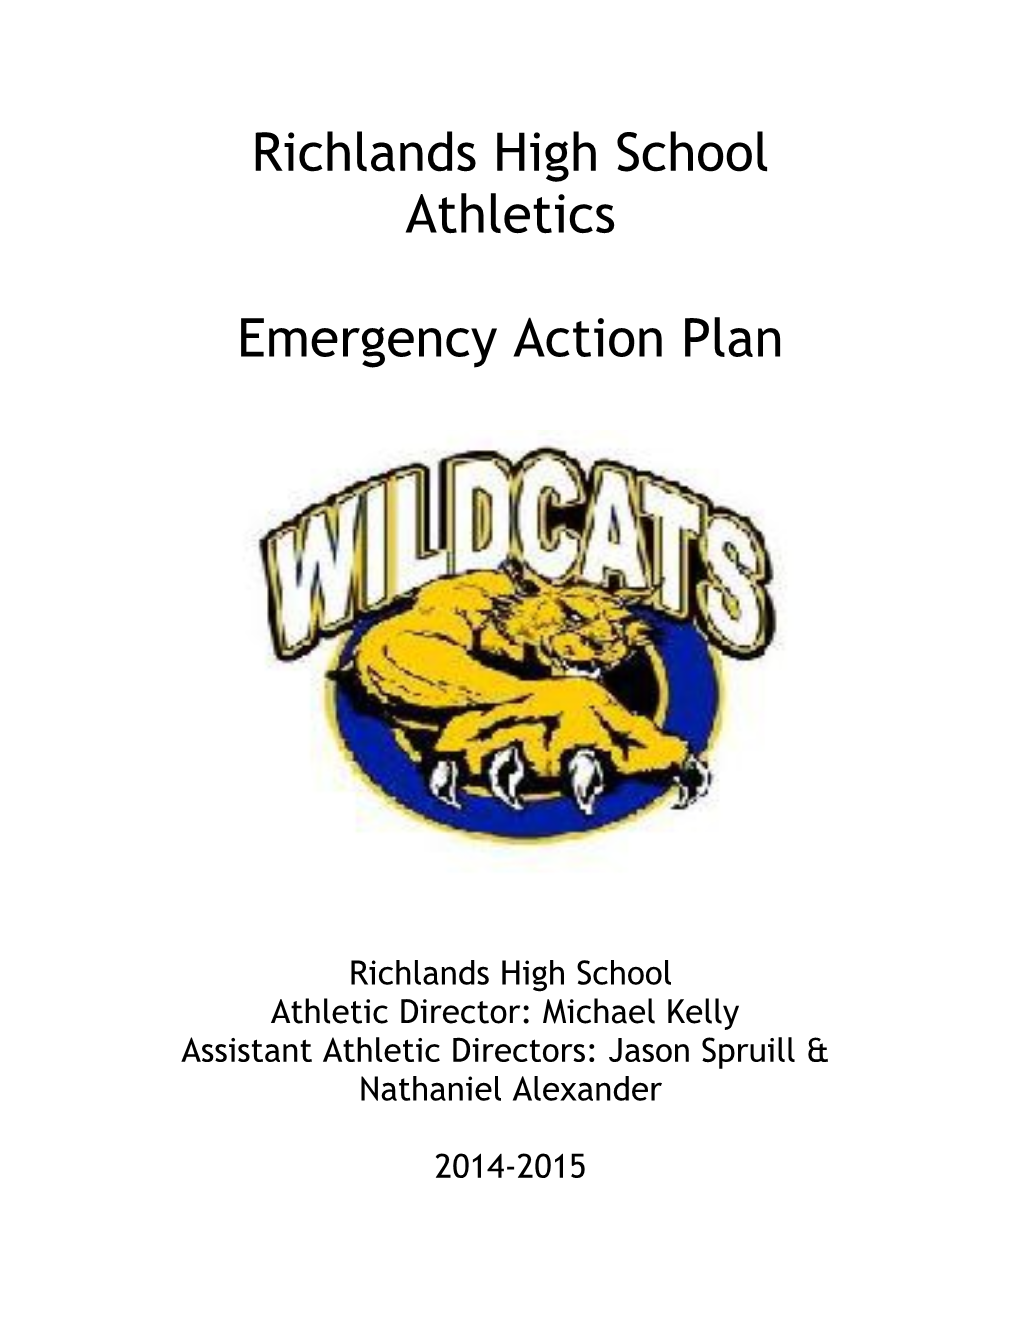 Richlands High School Emergency Action Plan